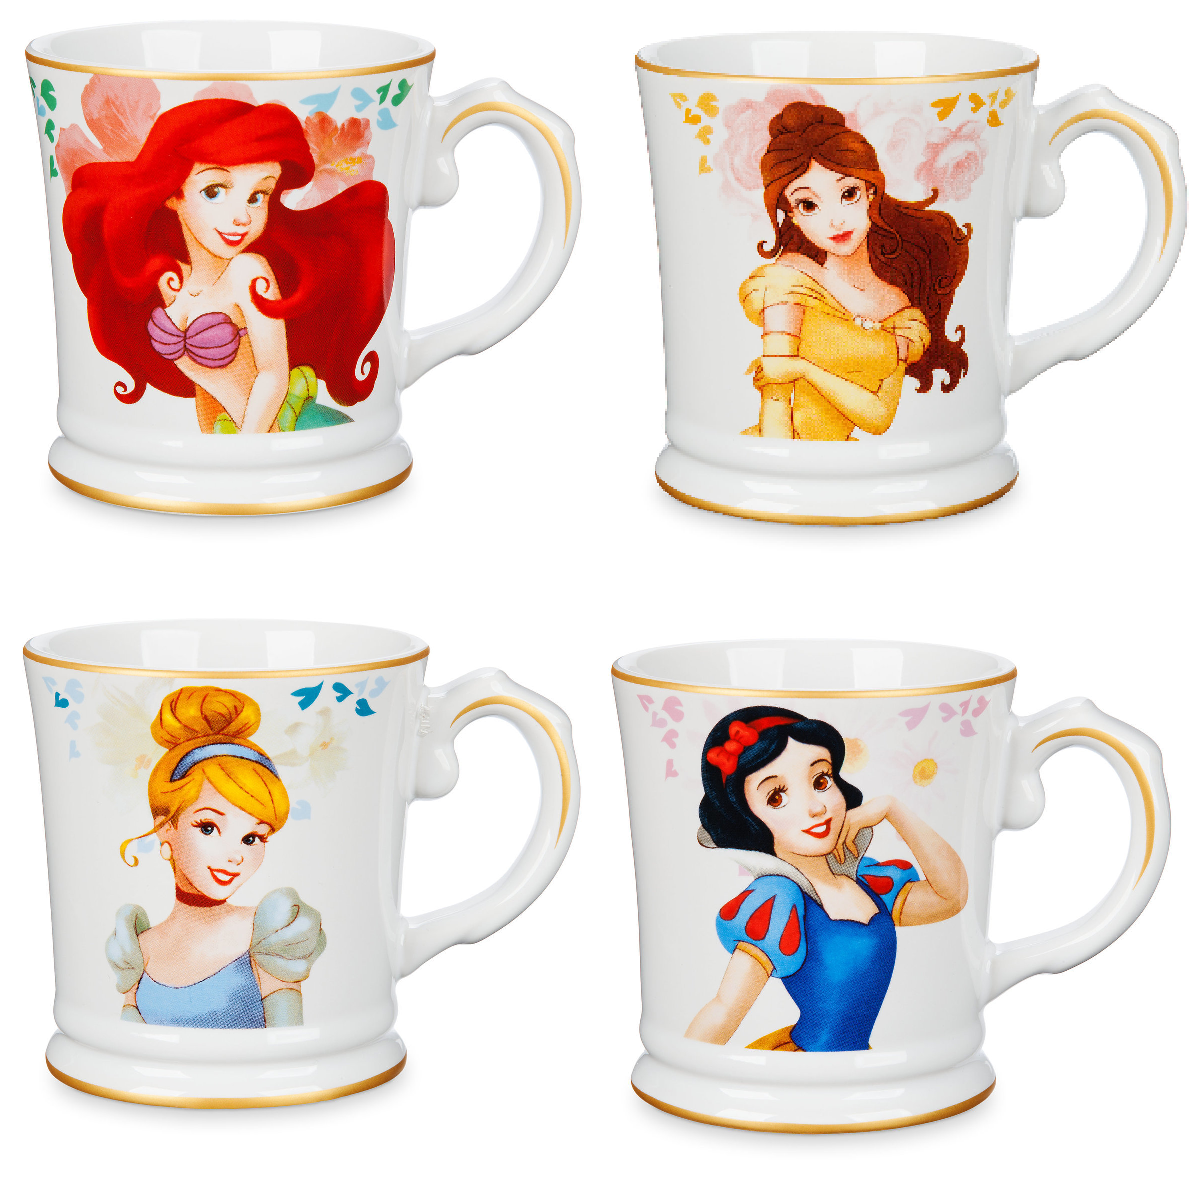 Disney Store Princess Belle Coffee Mug Gold 2016